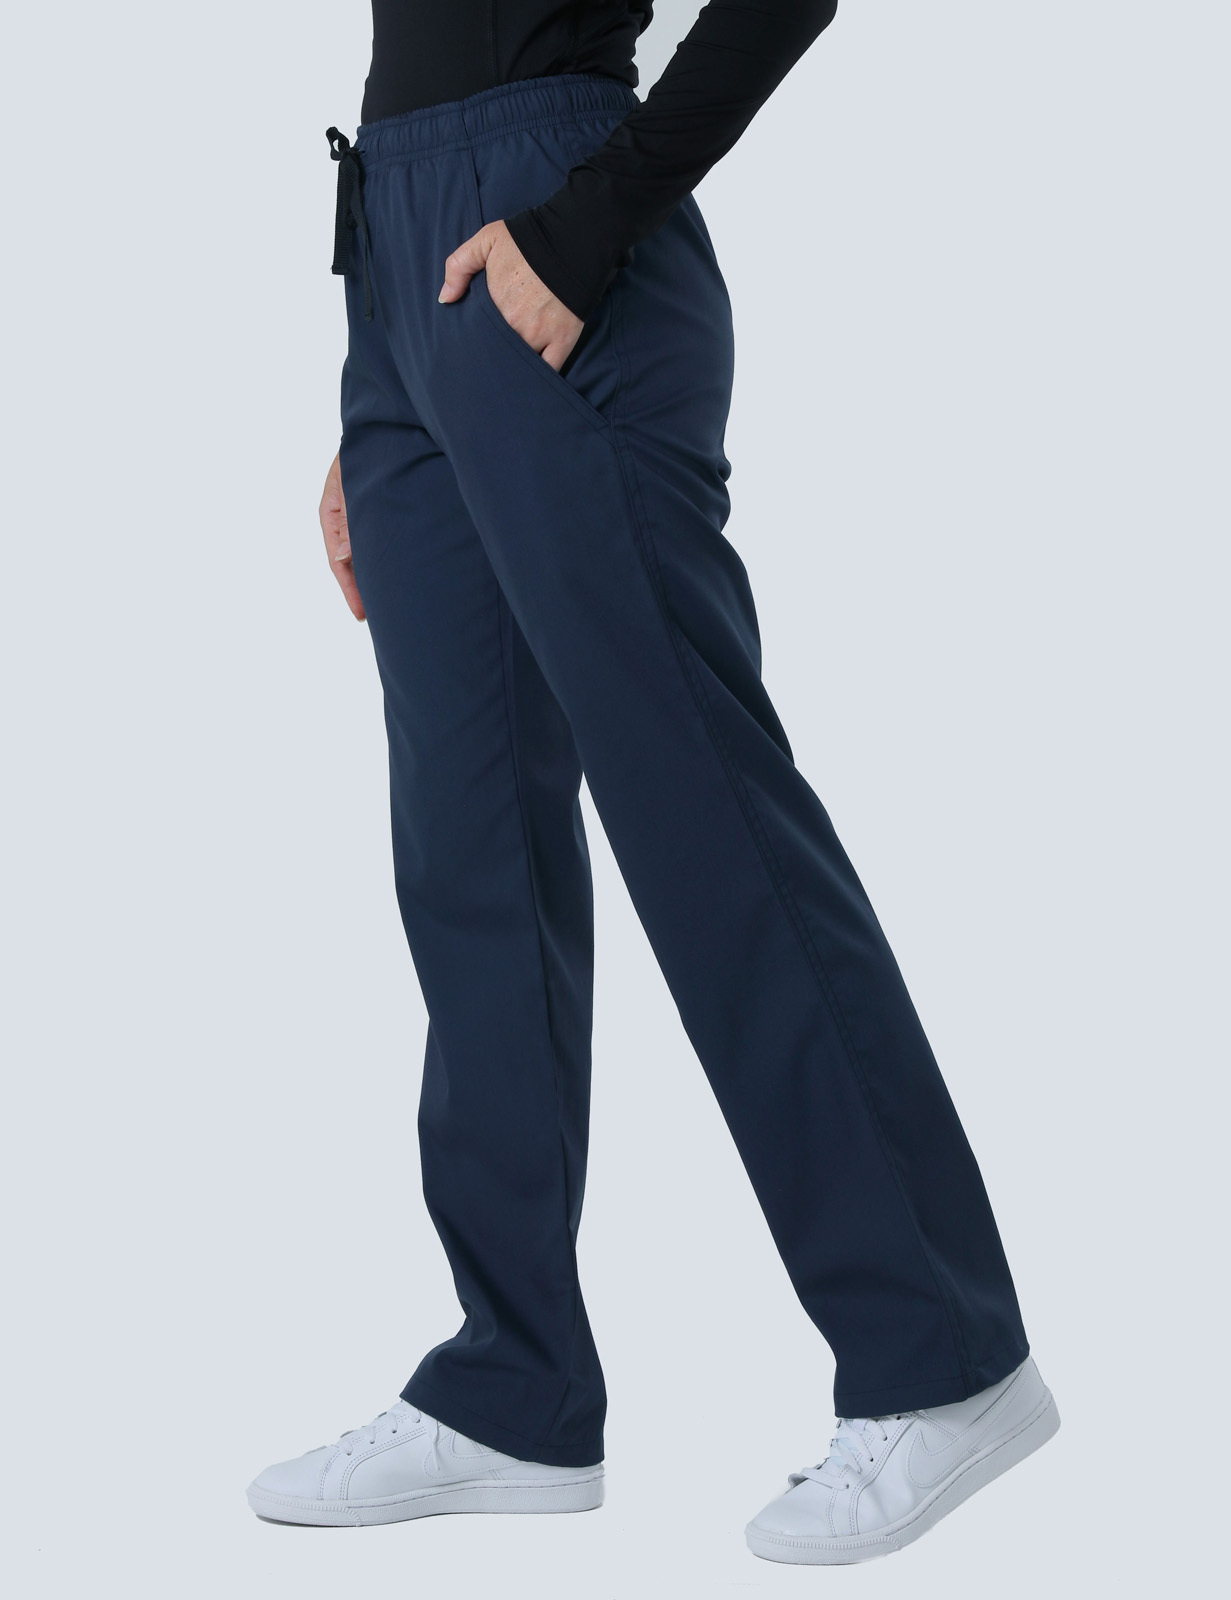 Women's Regular Cut Pants - Navy - 4X large